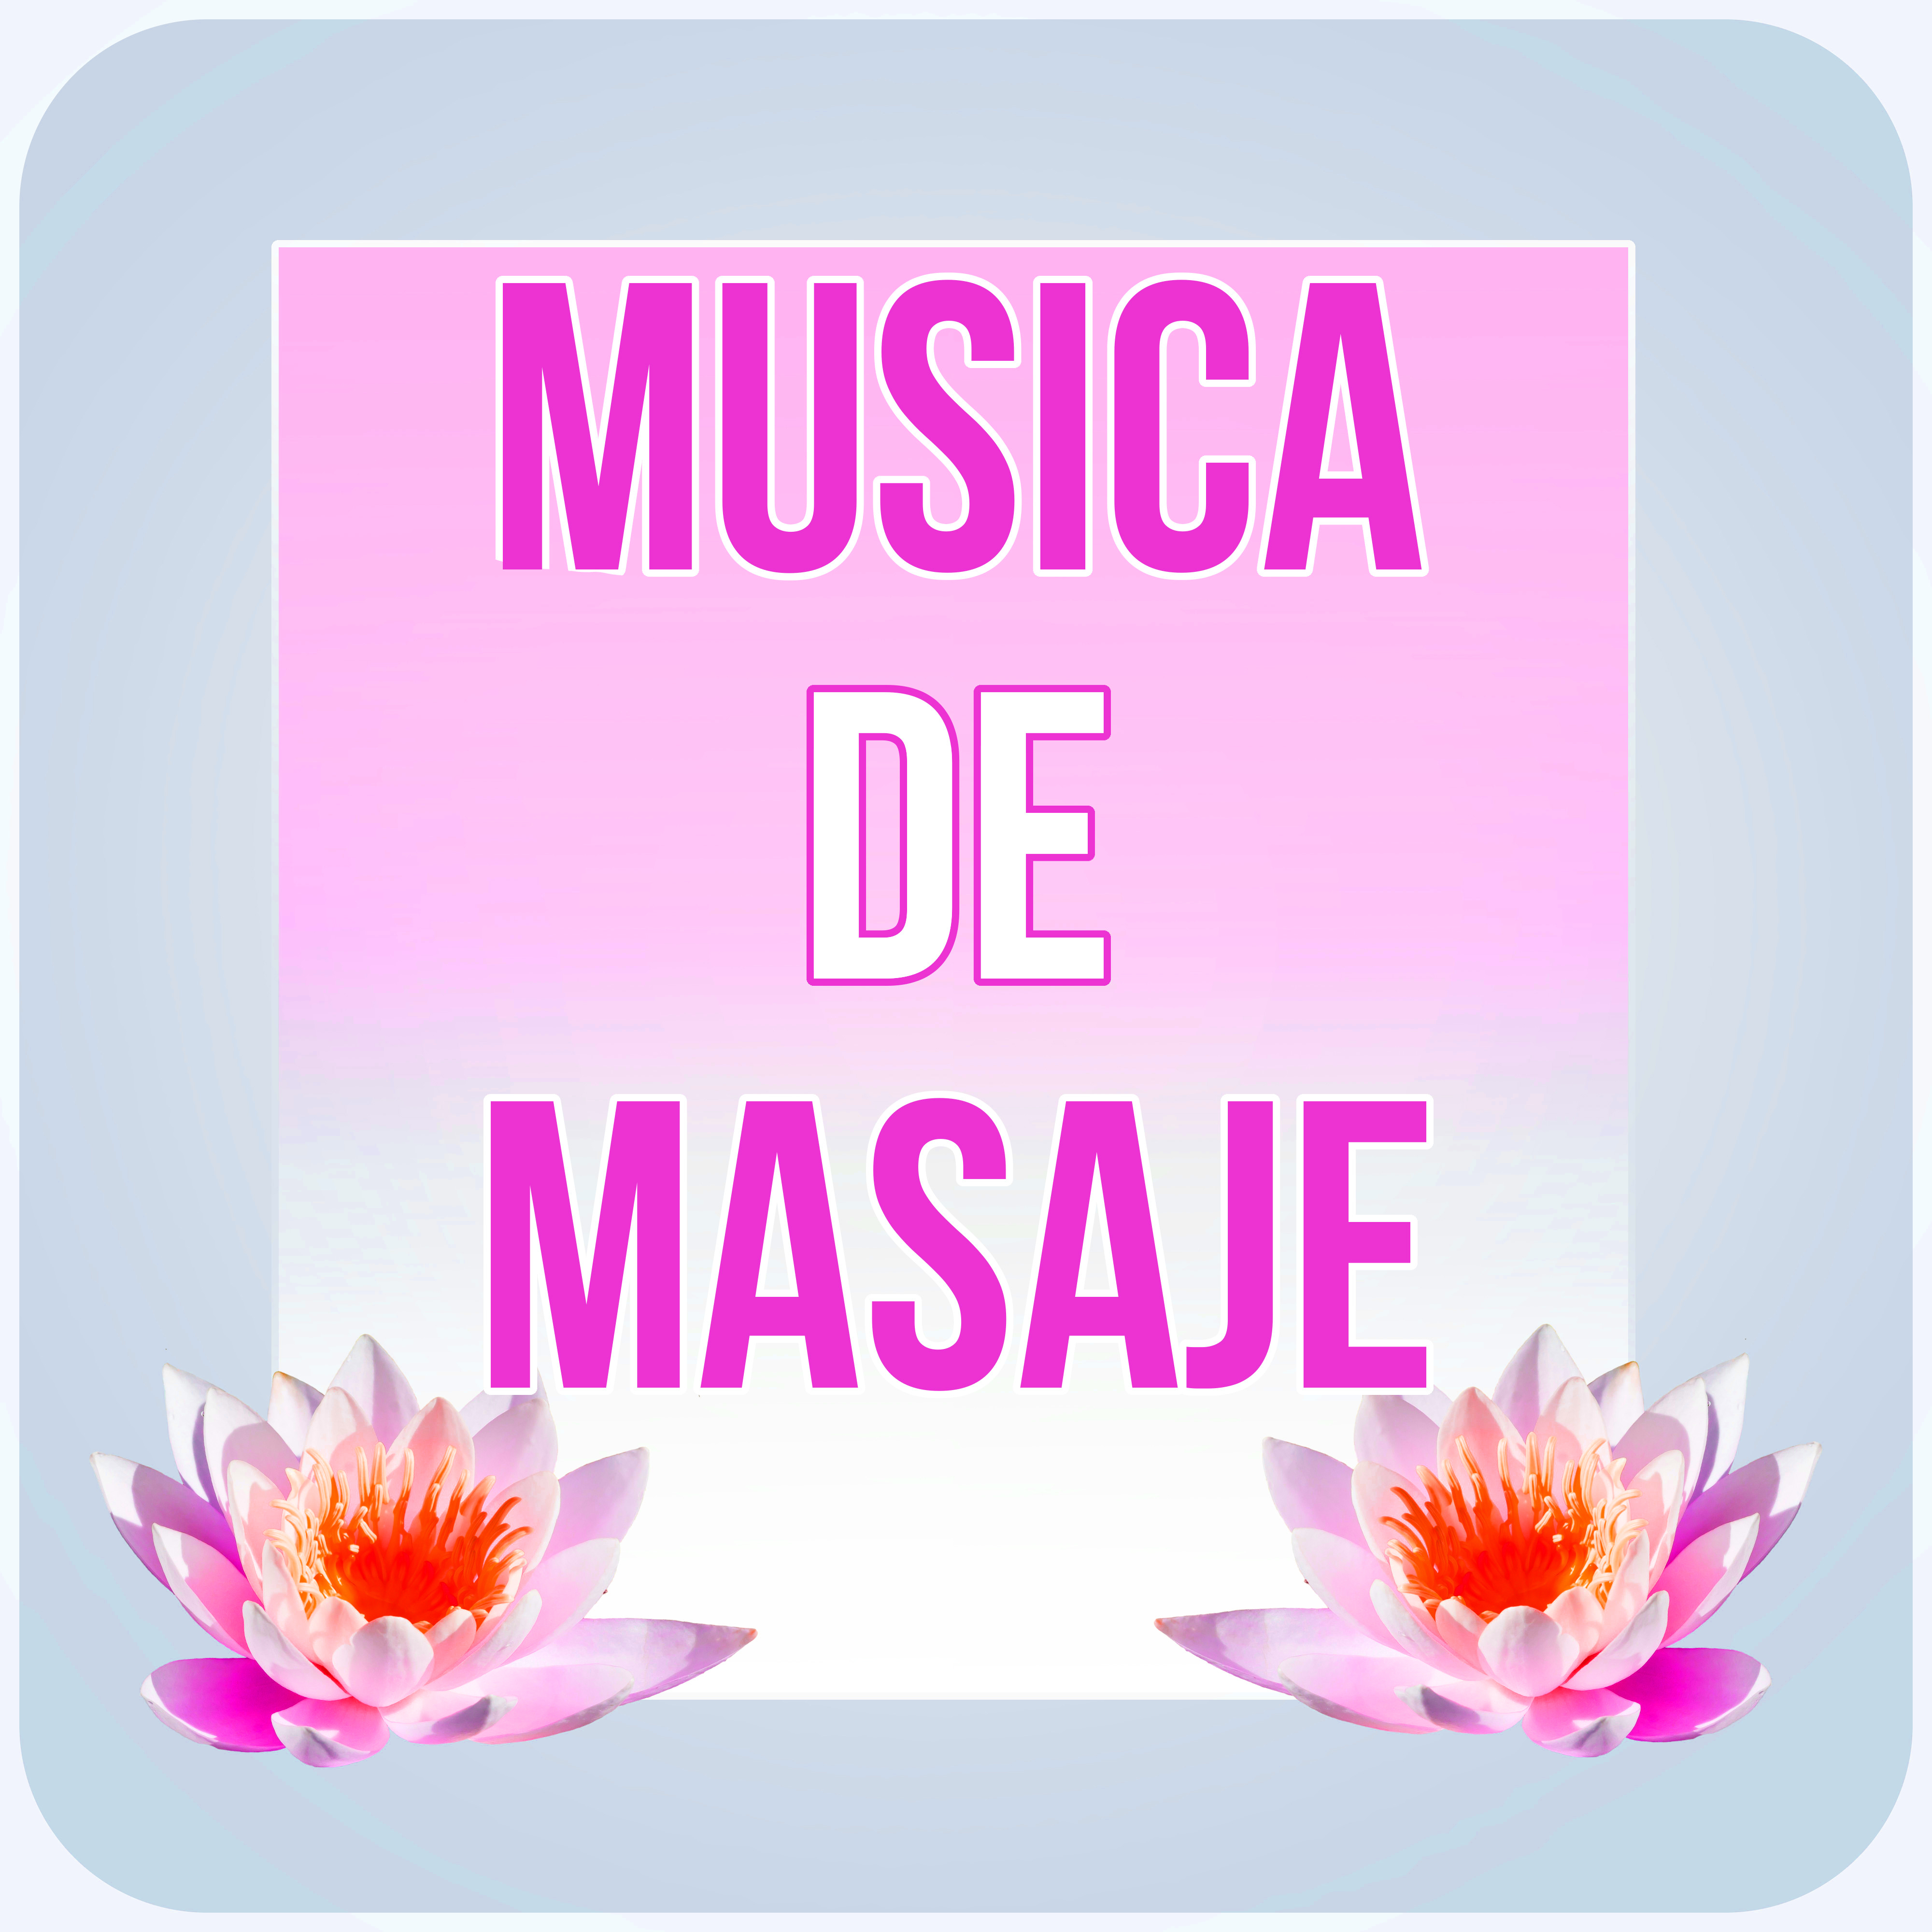 Musica de Masaje - Musica para Relajacion, Musica Relajante, Musica Reiki, Sonidos de la Naturaleza, Música de Ambiente para de Masaje, Masaje Erótico